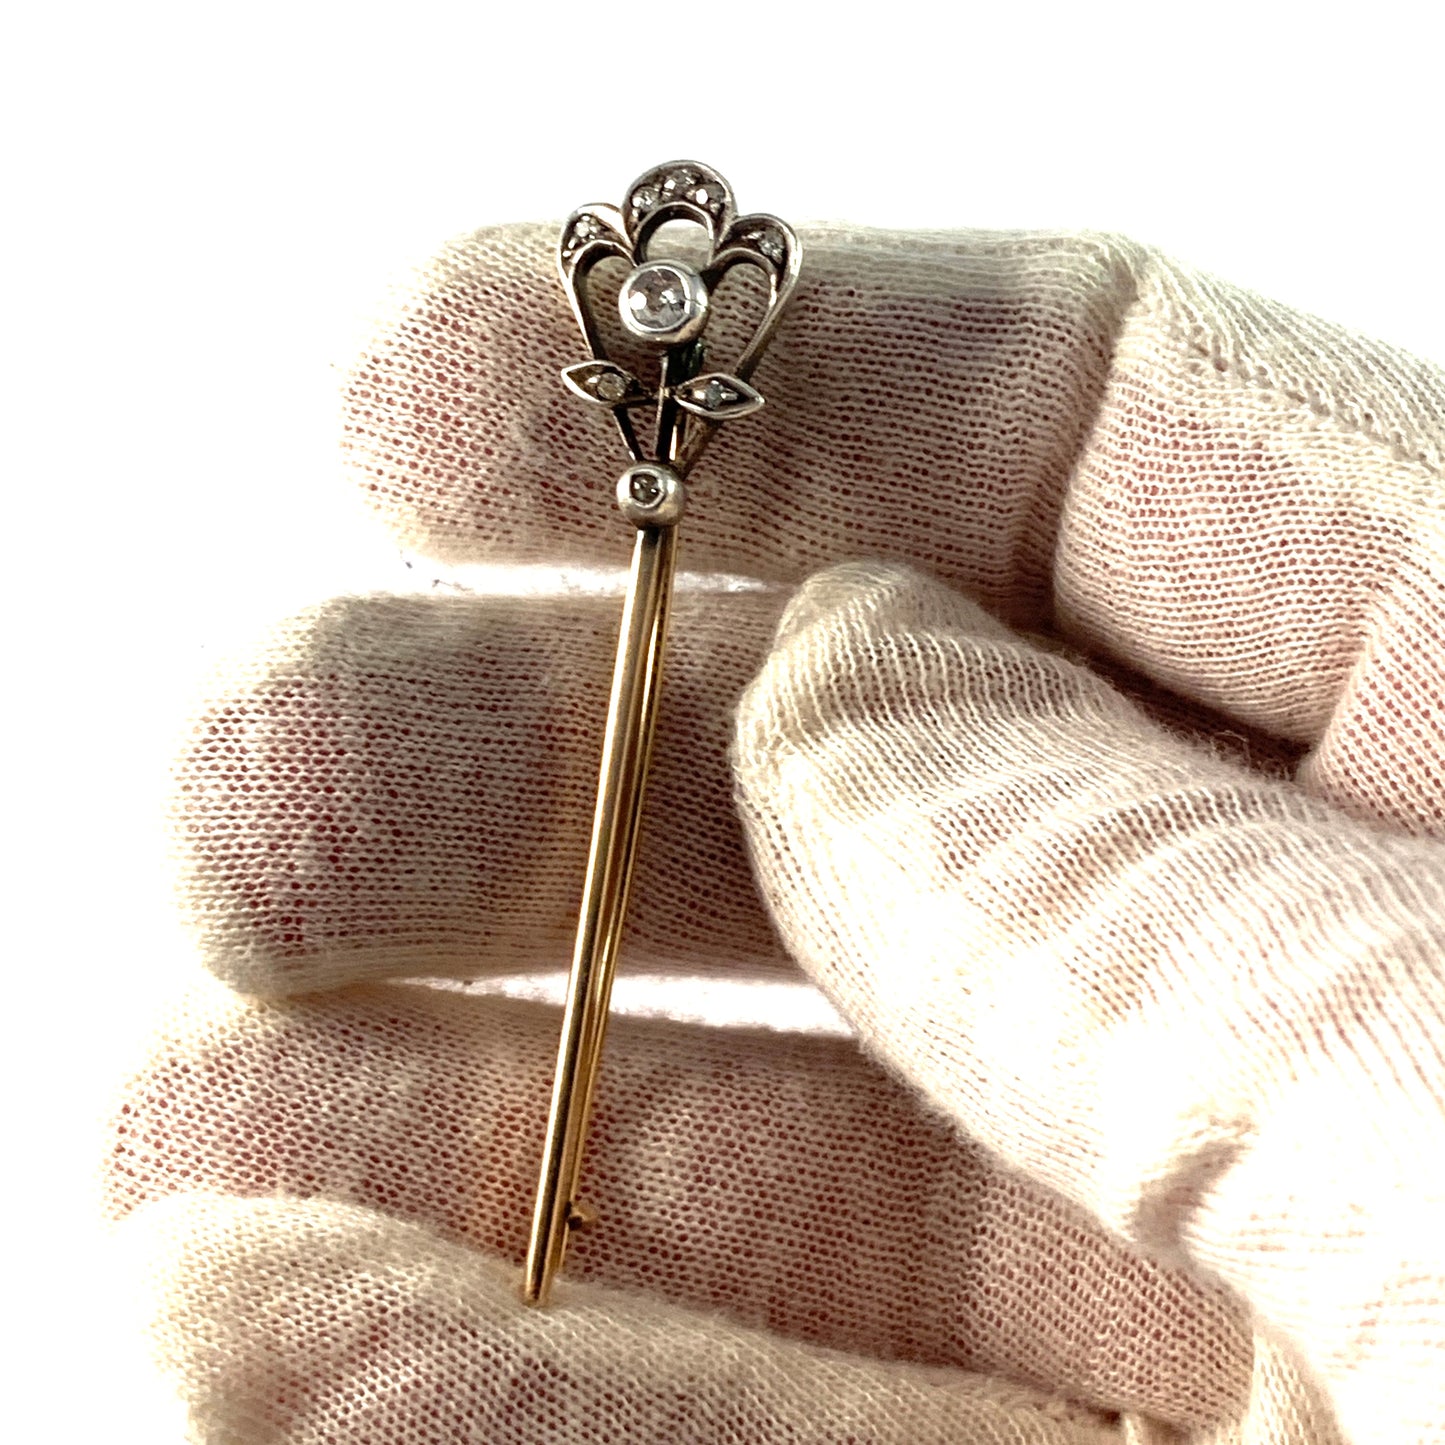 Antique Art Nouveau 14k Gold, Silver, Old Cut Diamond Brooch Pin.